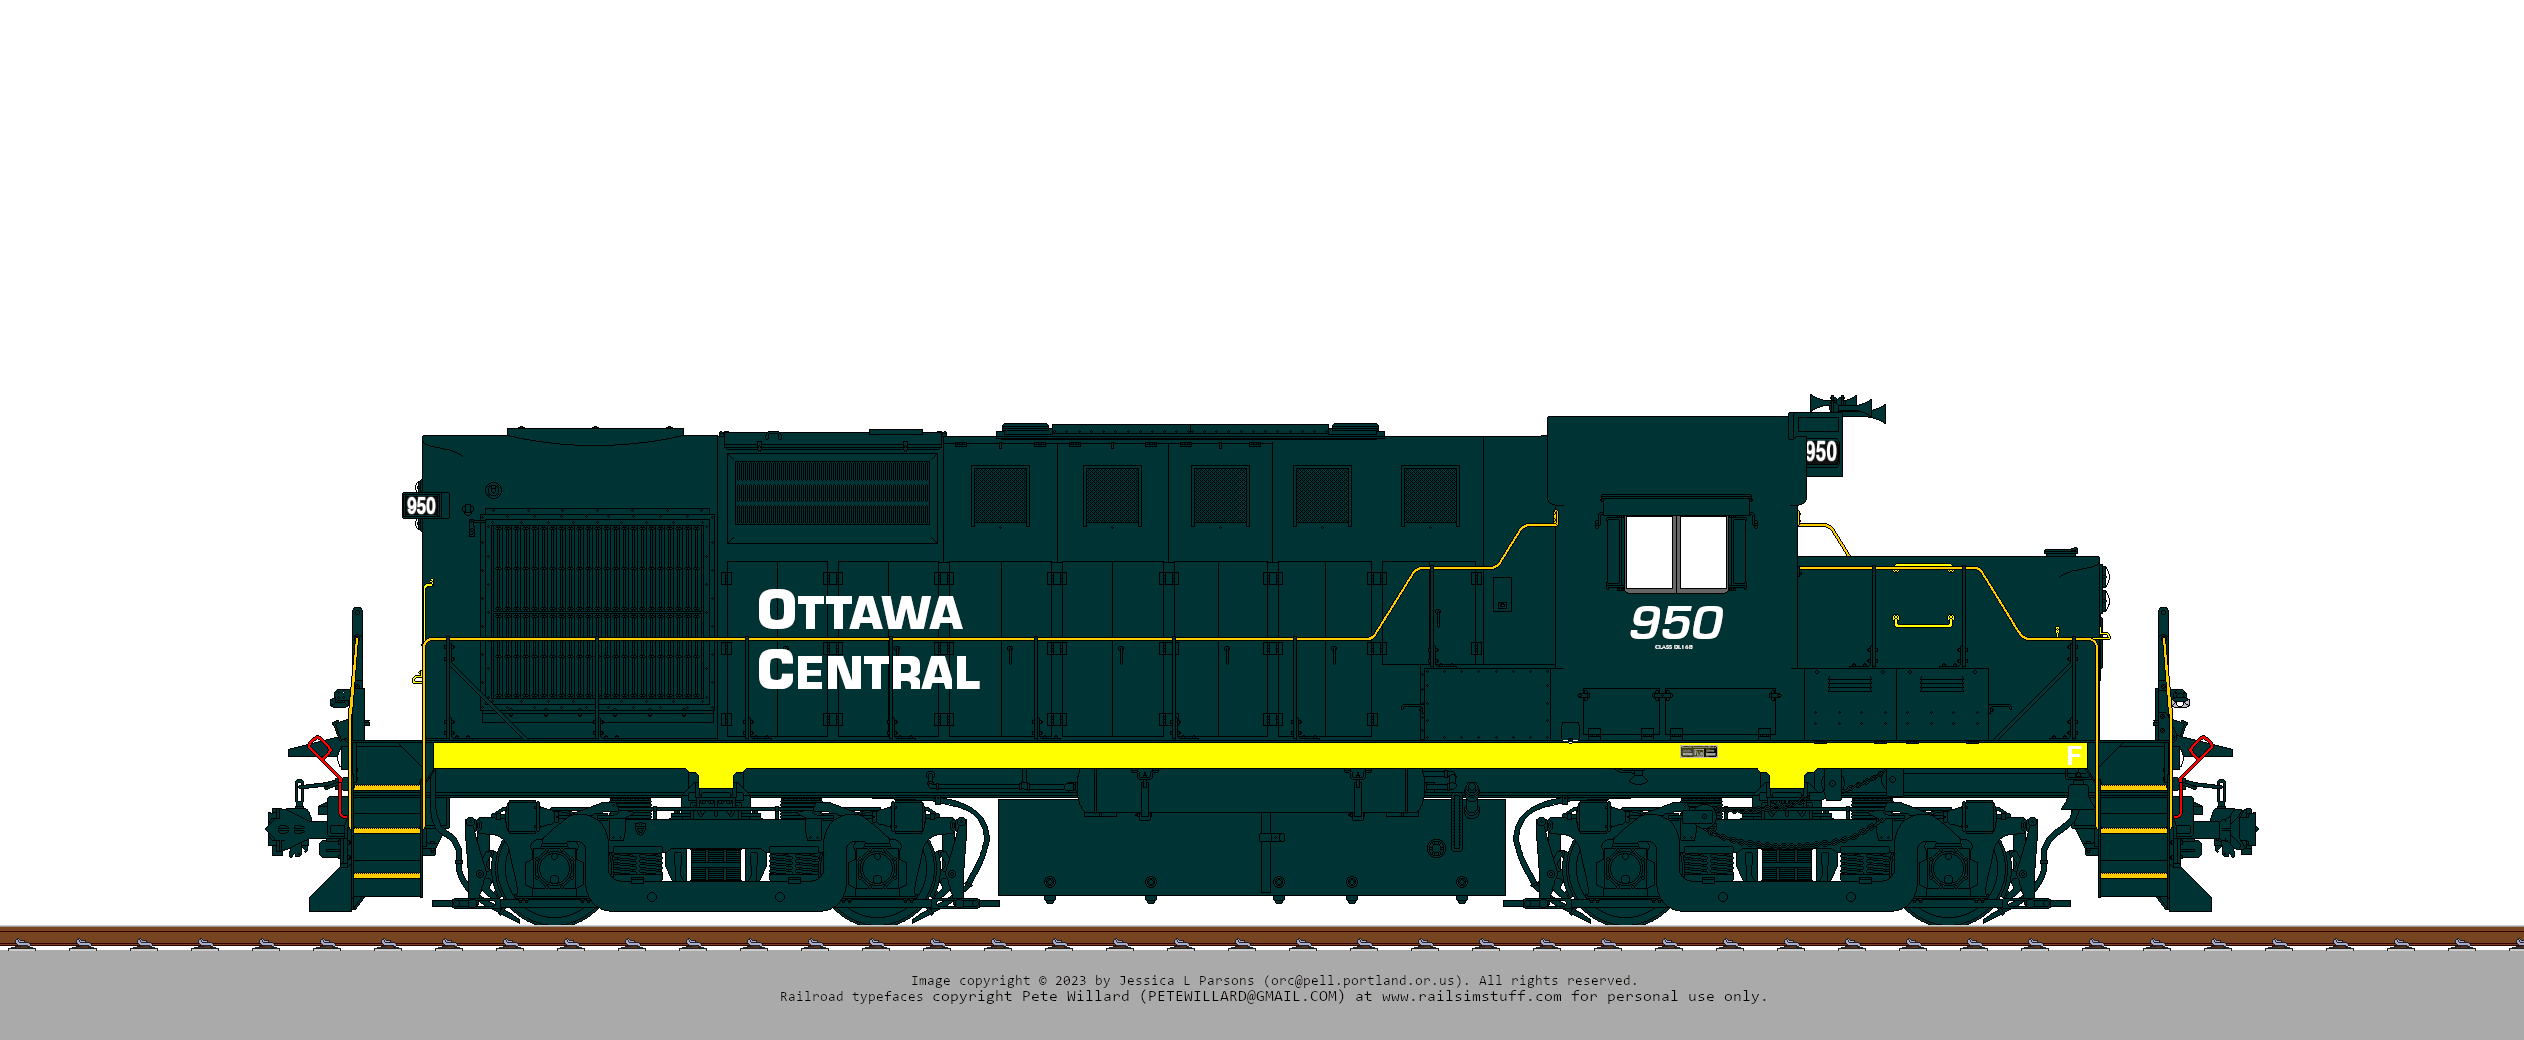 Ottawa Central RS-18m #950 in Penn Central black